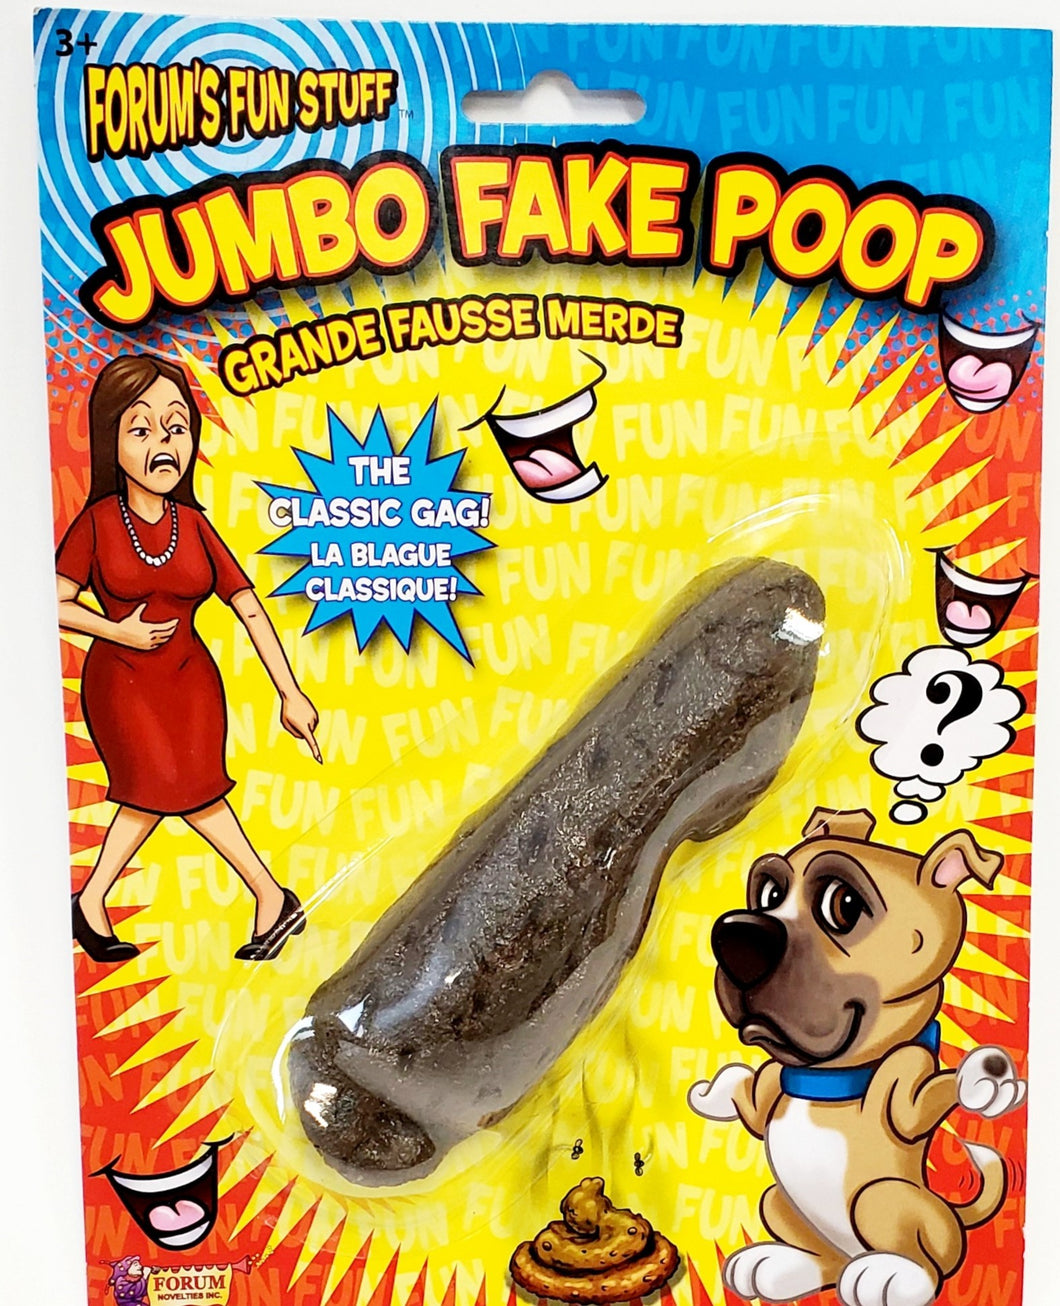 fake dog turds